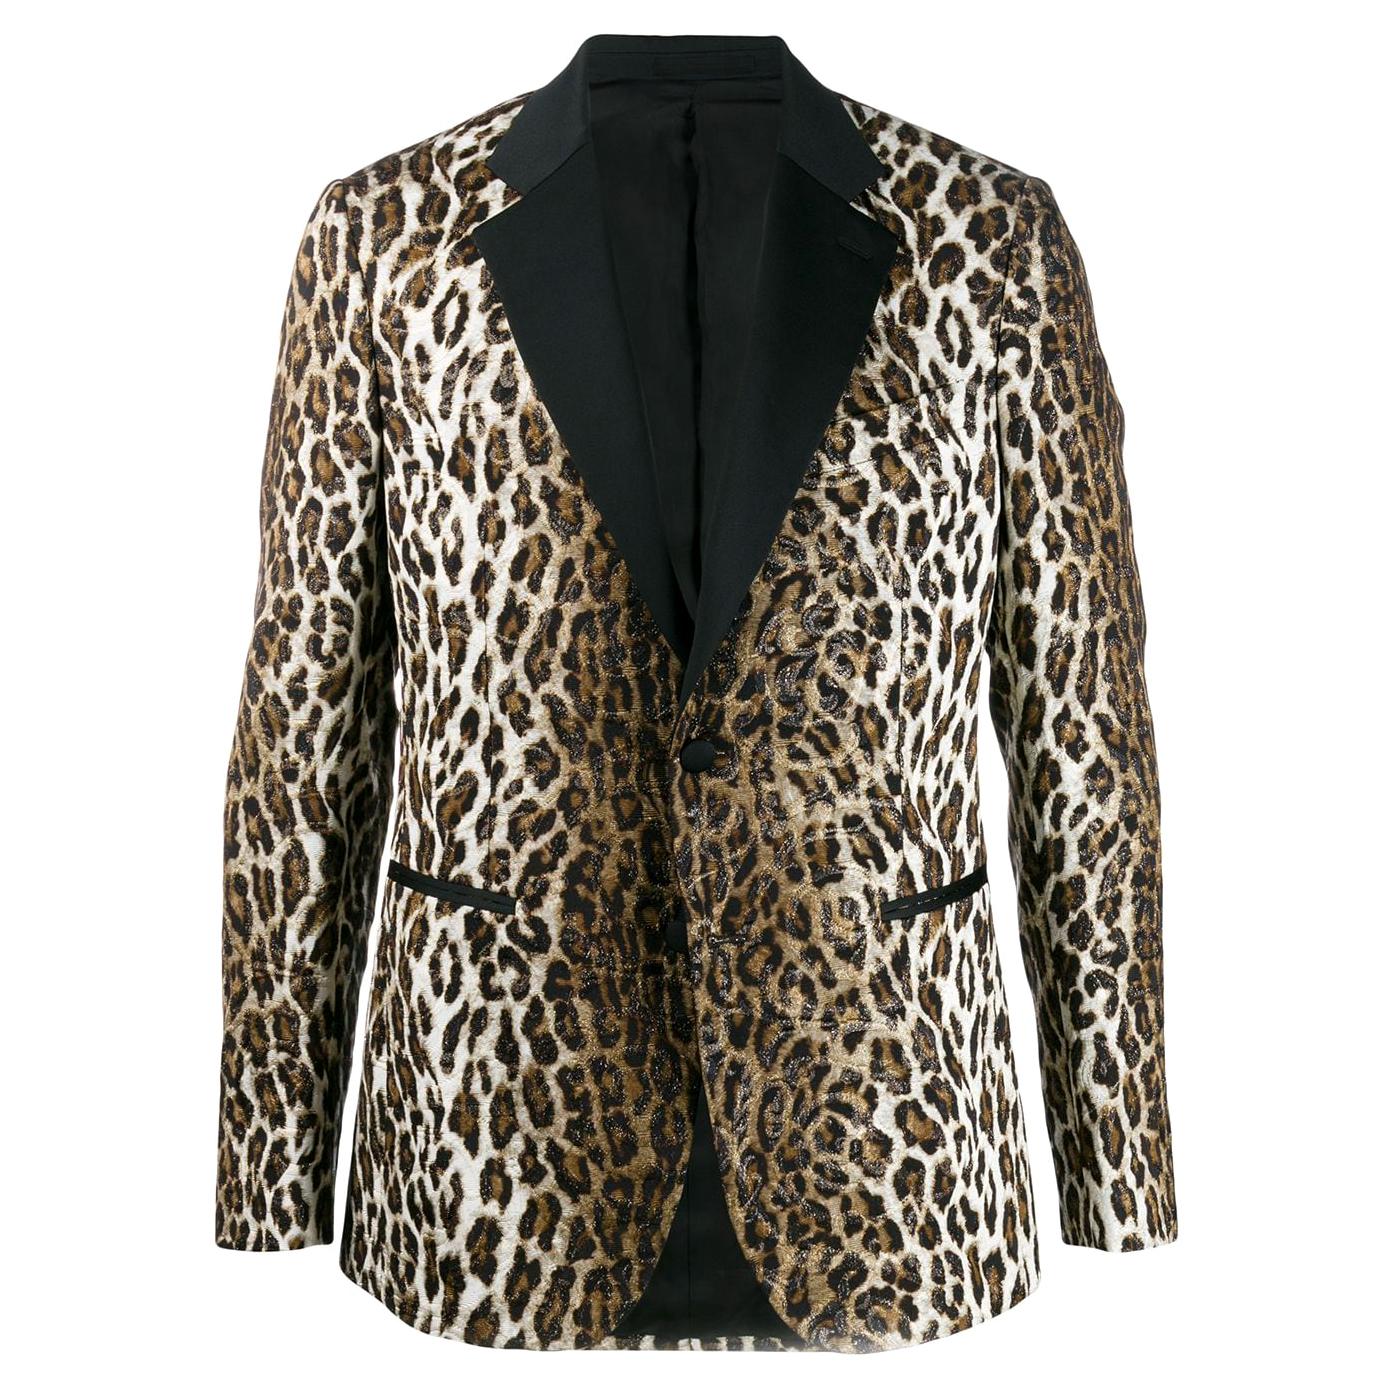 Versace Mens FW19 Jacquard Leopard Print Tuxedo Jacket / Blazer Size 48 (IT)